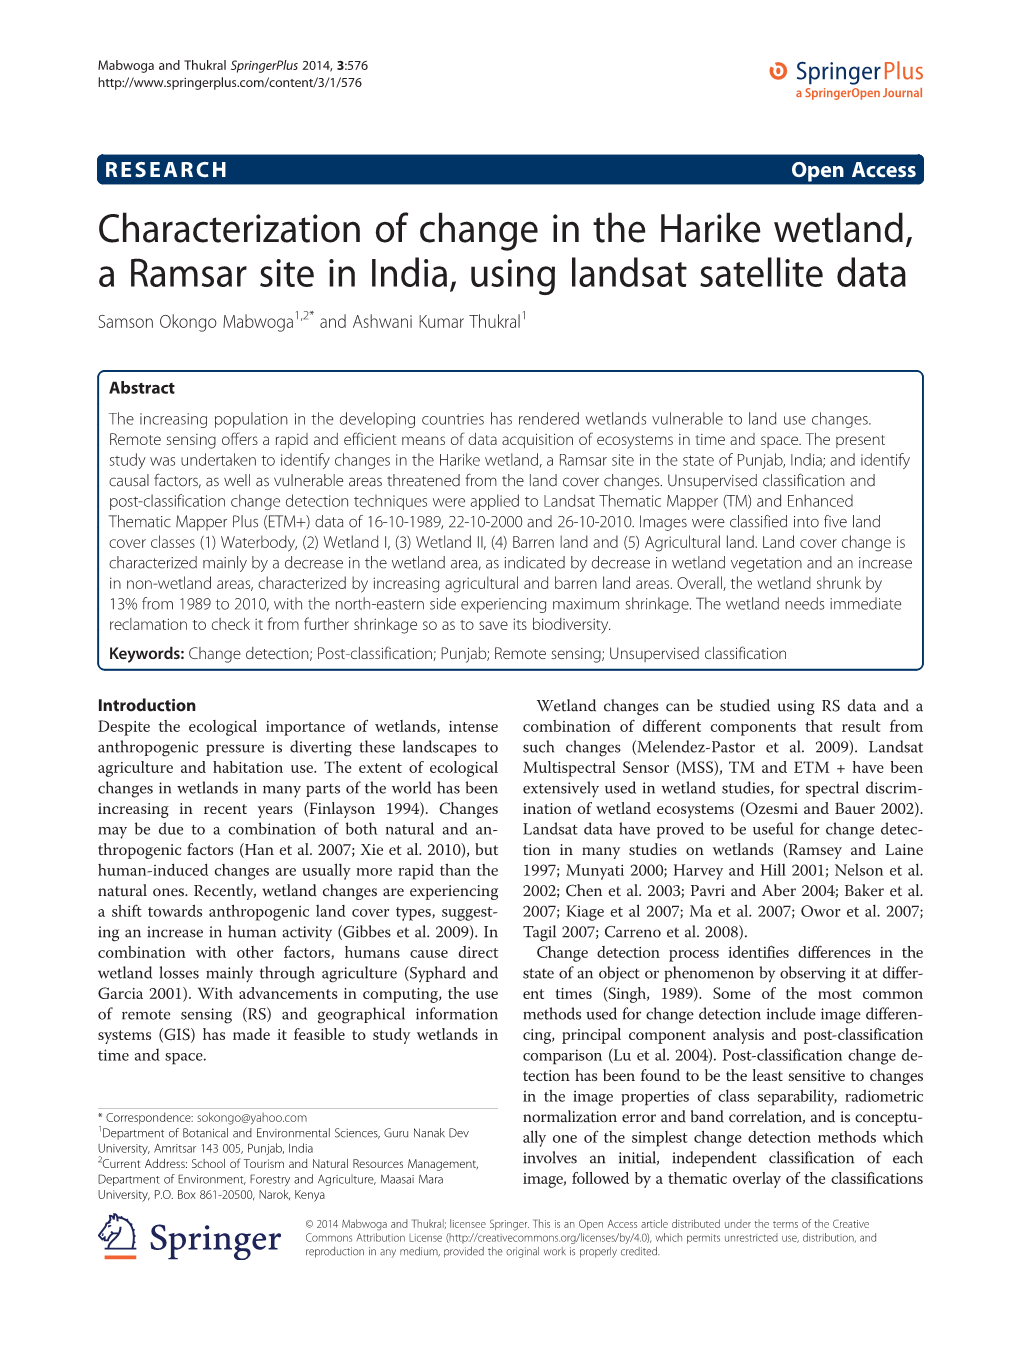 Characterization of Change in the Harike Wetland, a Ramsar Site in India, Using Landsat Satellite Data Samson Okongo Mabwoga1,2* and Ashwani Kumar Thukral1